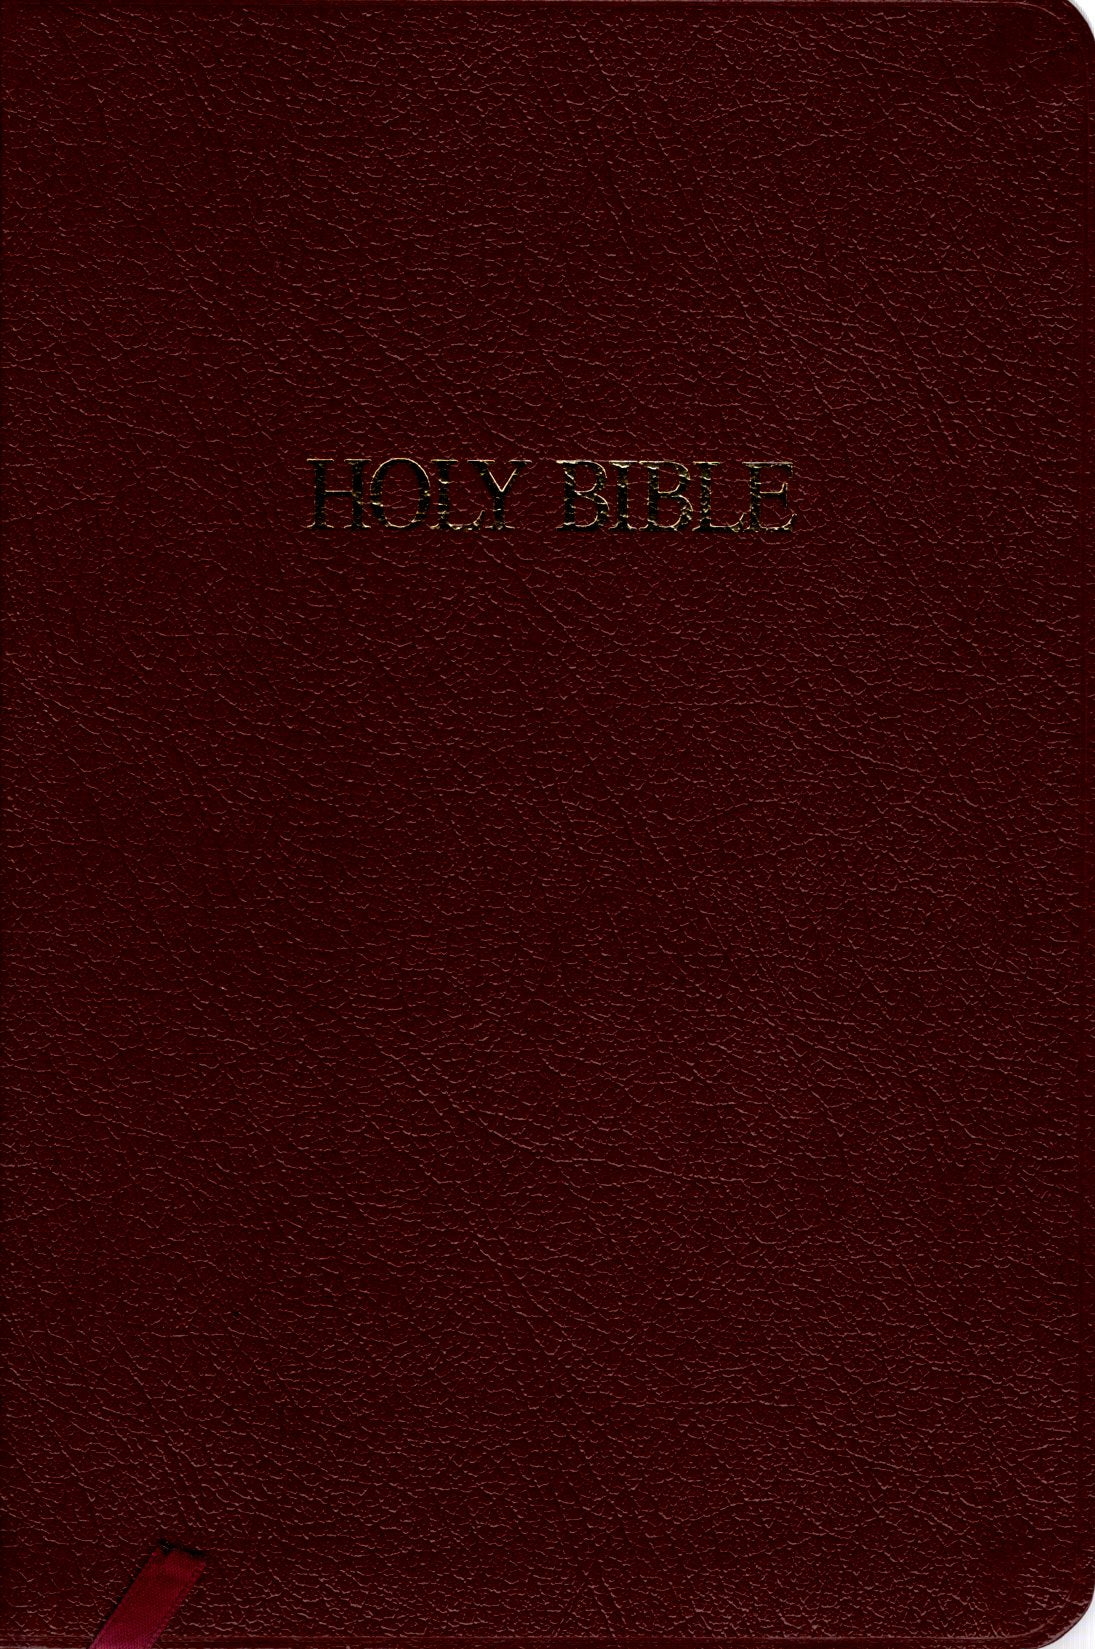 The Broadman & Holman KJV Special Reference Bible - Bonded Leather